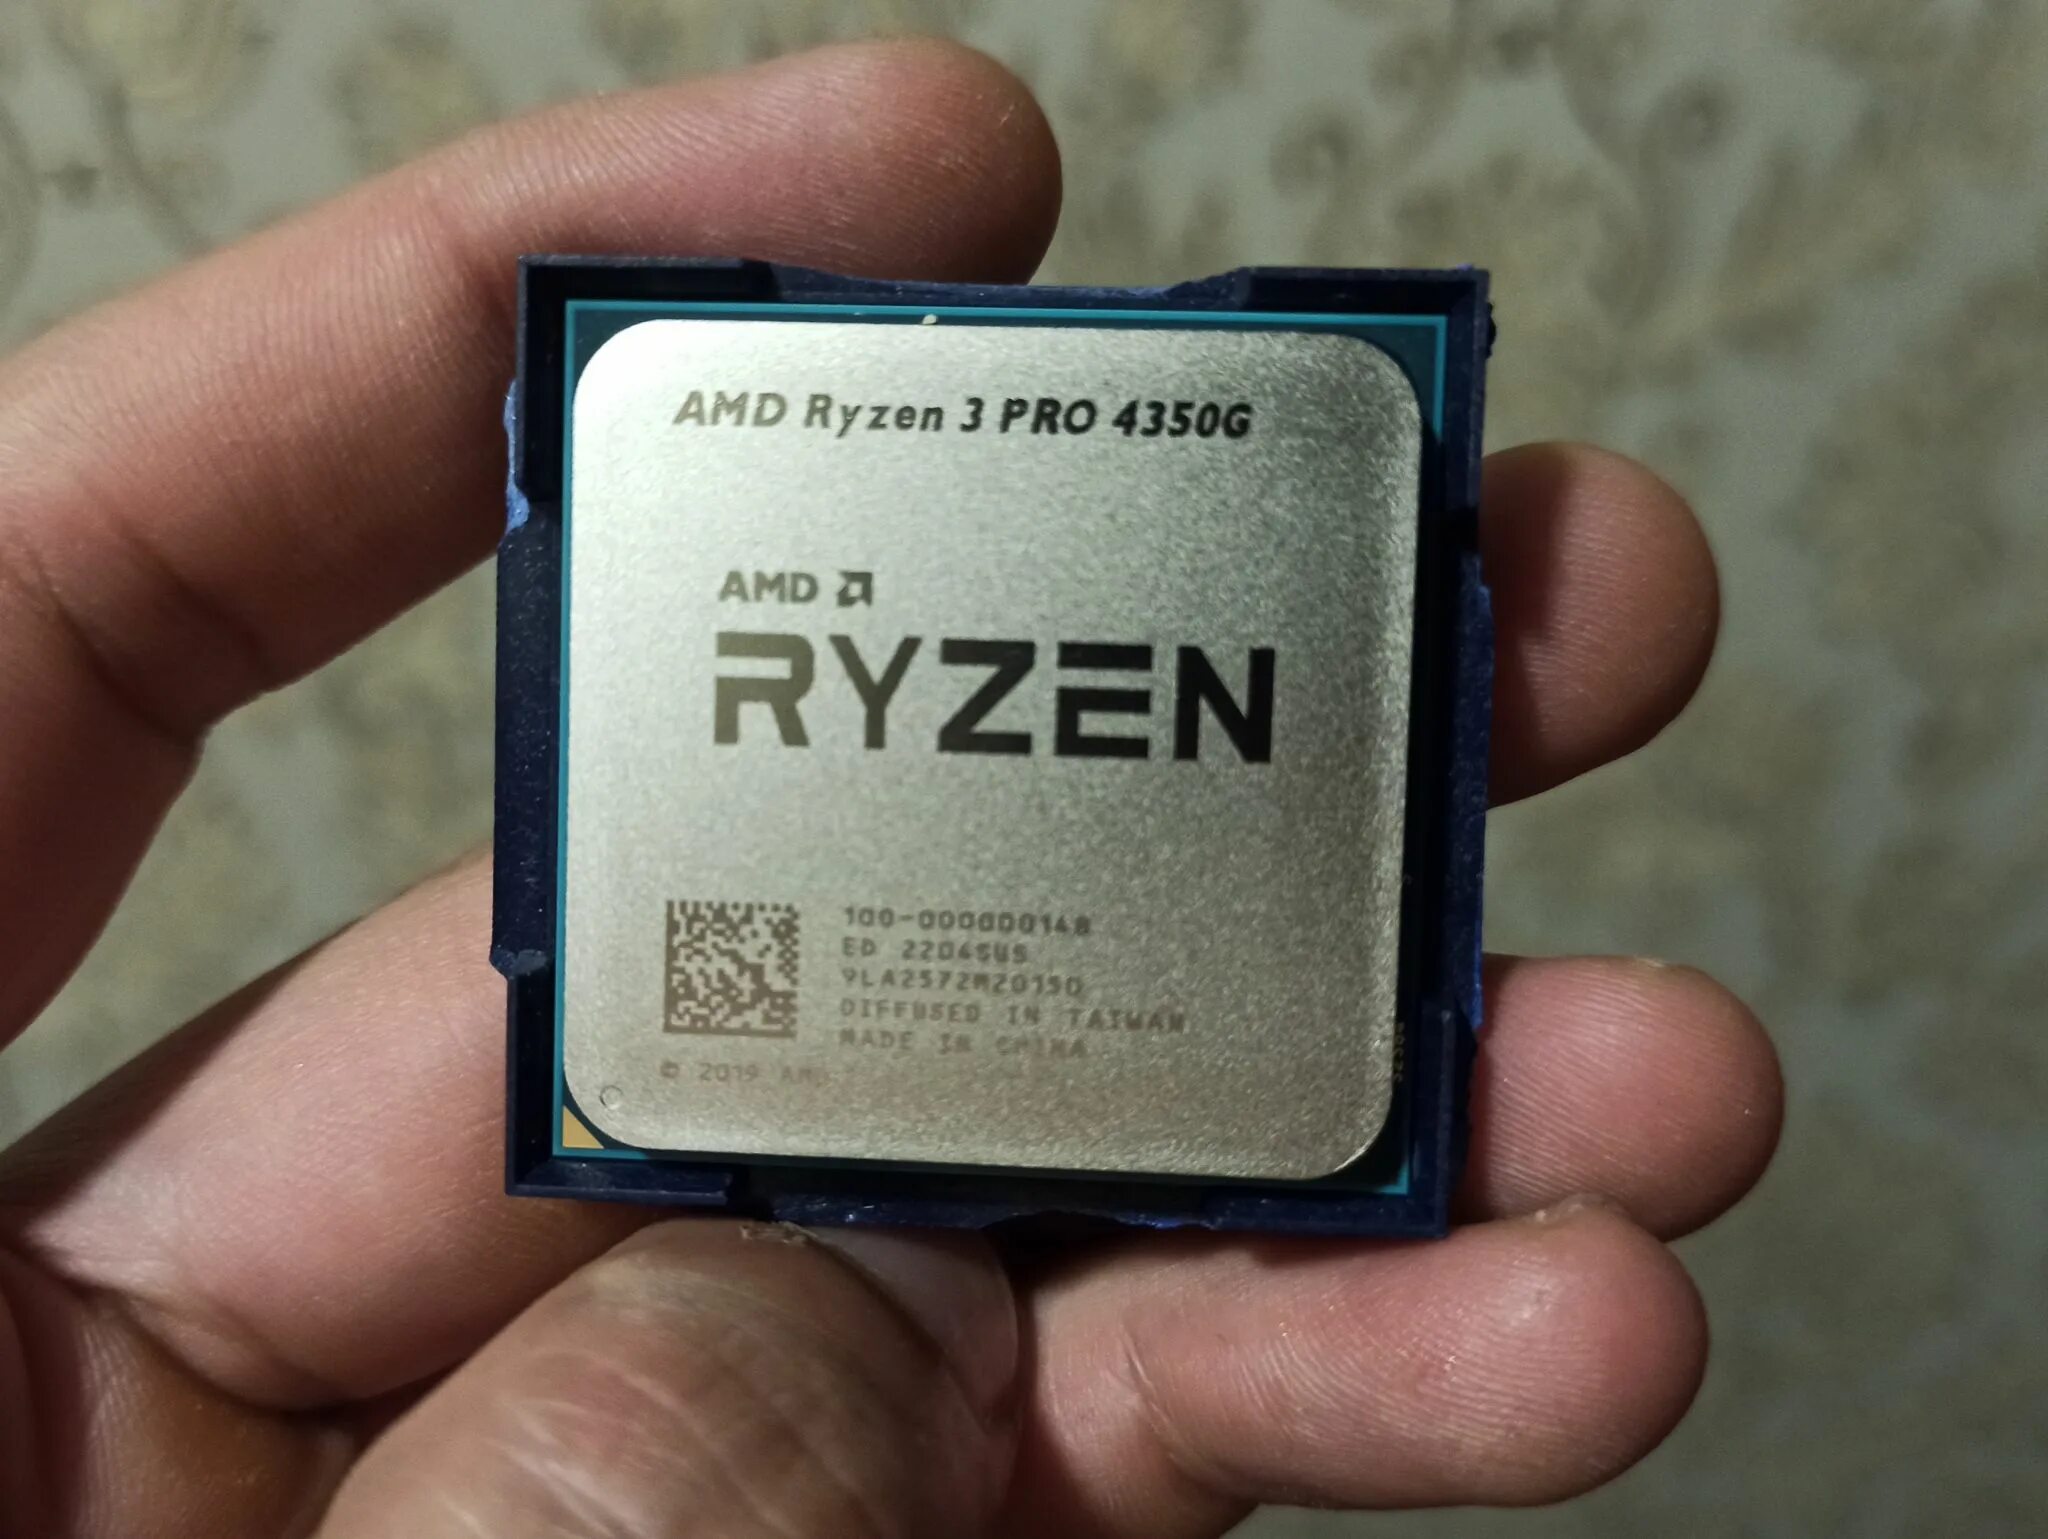 Процессор AMD Ryzen 3 Pro 4350g OEM. AMD Ryzen 3 Pro 4350g am4, 4 x 3800 МГЦ. Ryzen 3 4350g Pro в 3d. AMD Ryzen 3 Pro 4350g OEM (С кулером). 3 pro 4350g